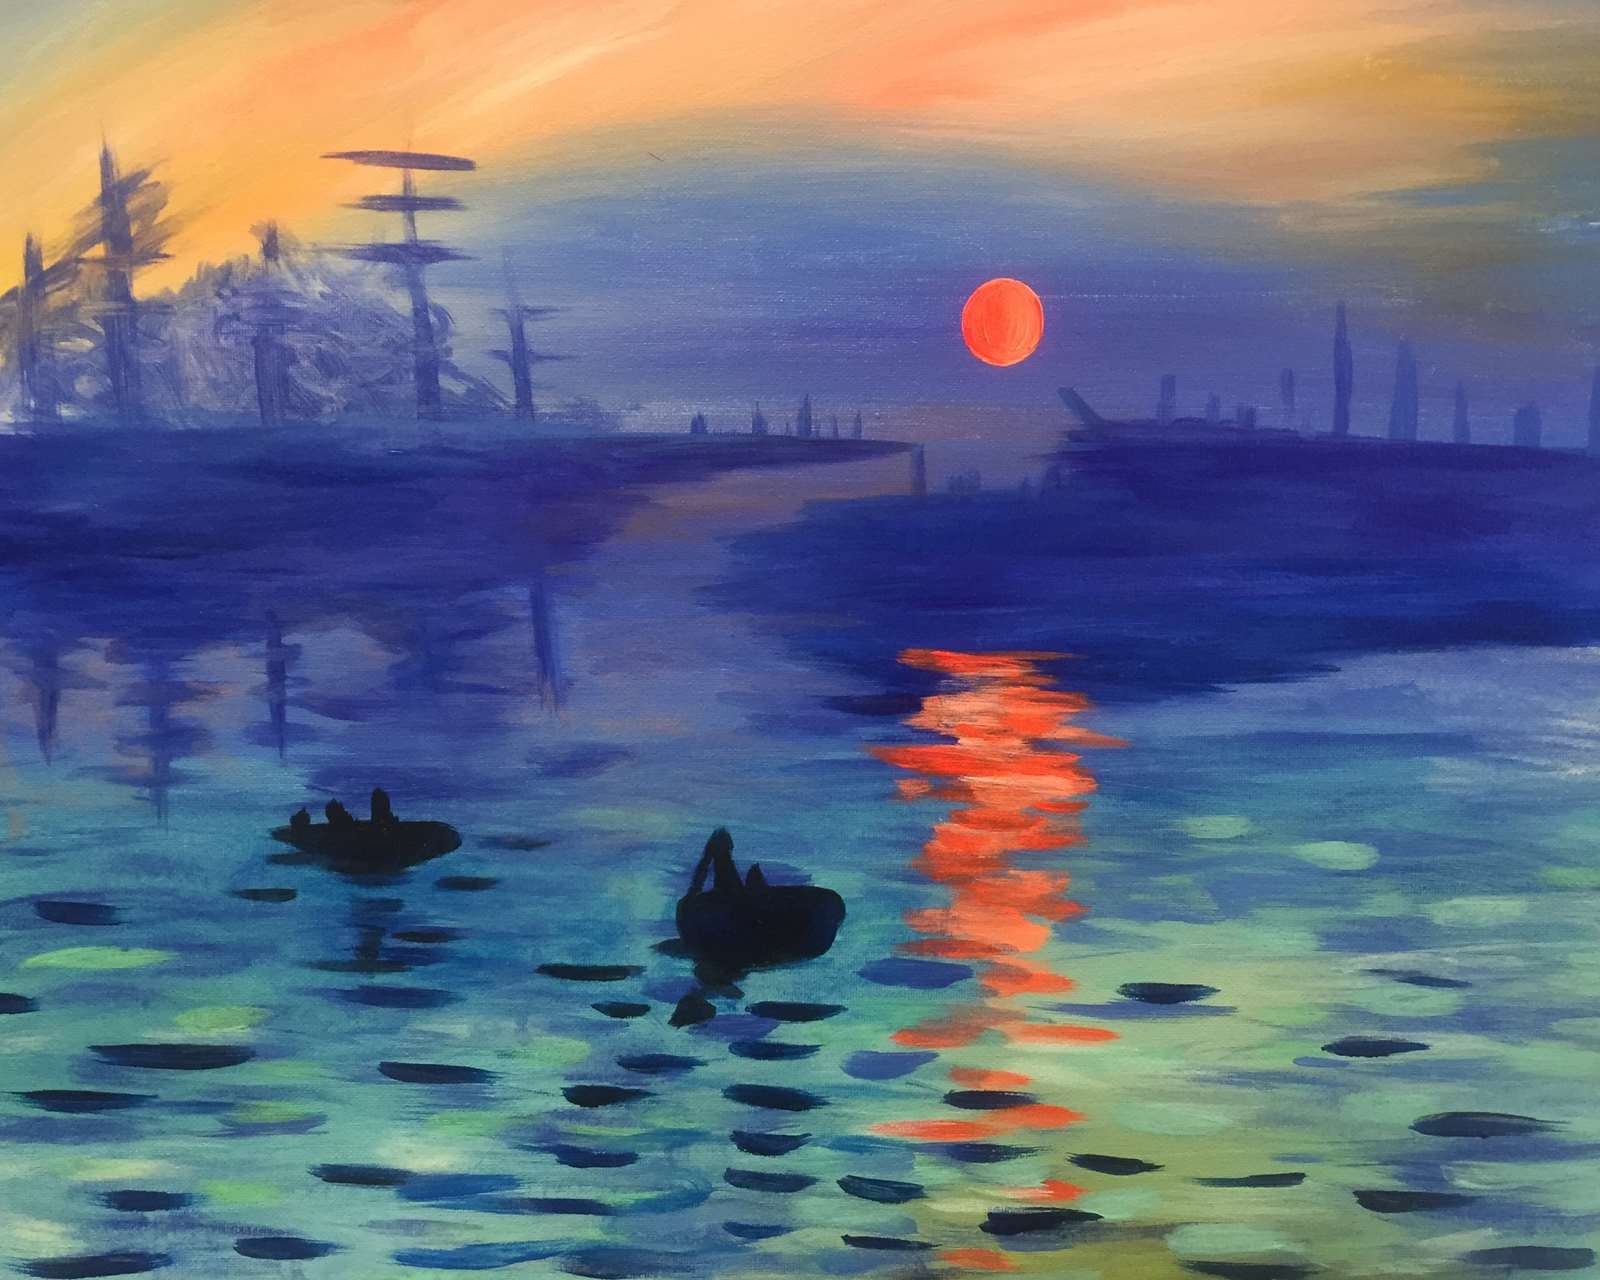 Monet's Impression, Sunrise, Mar 22 7:30PM